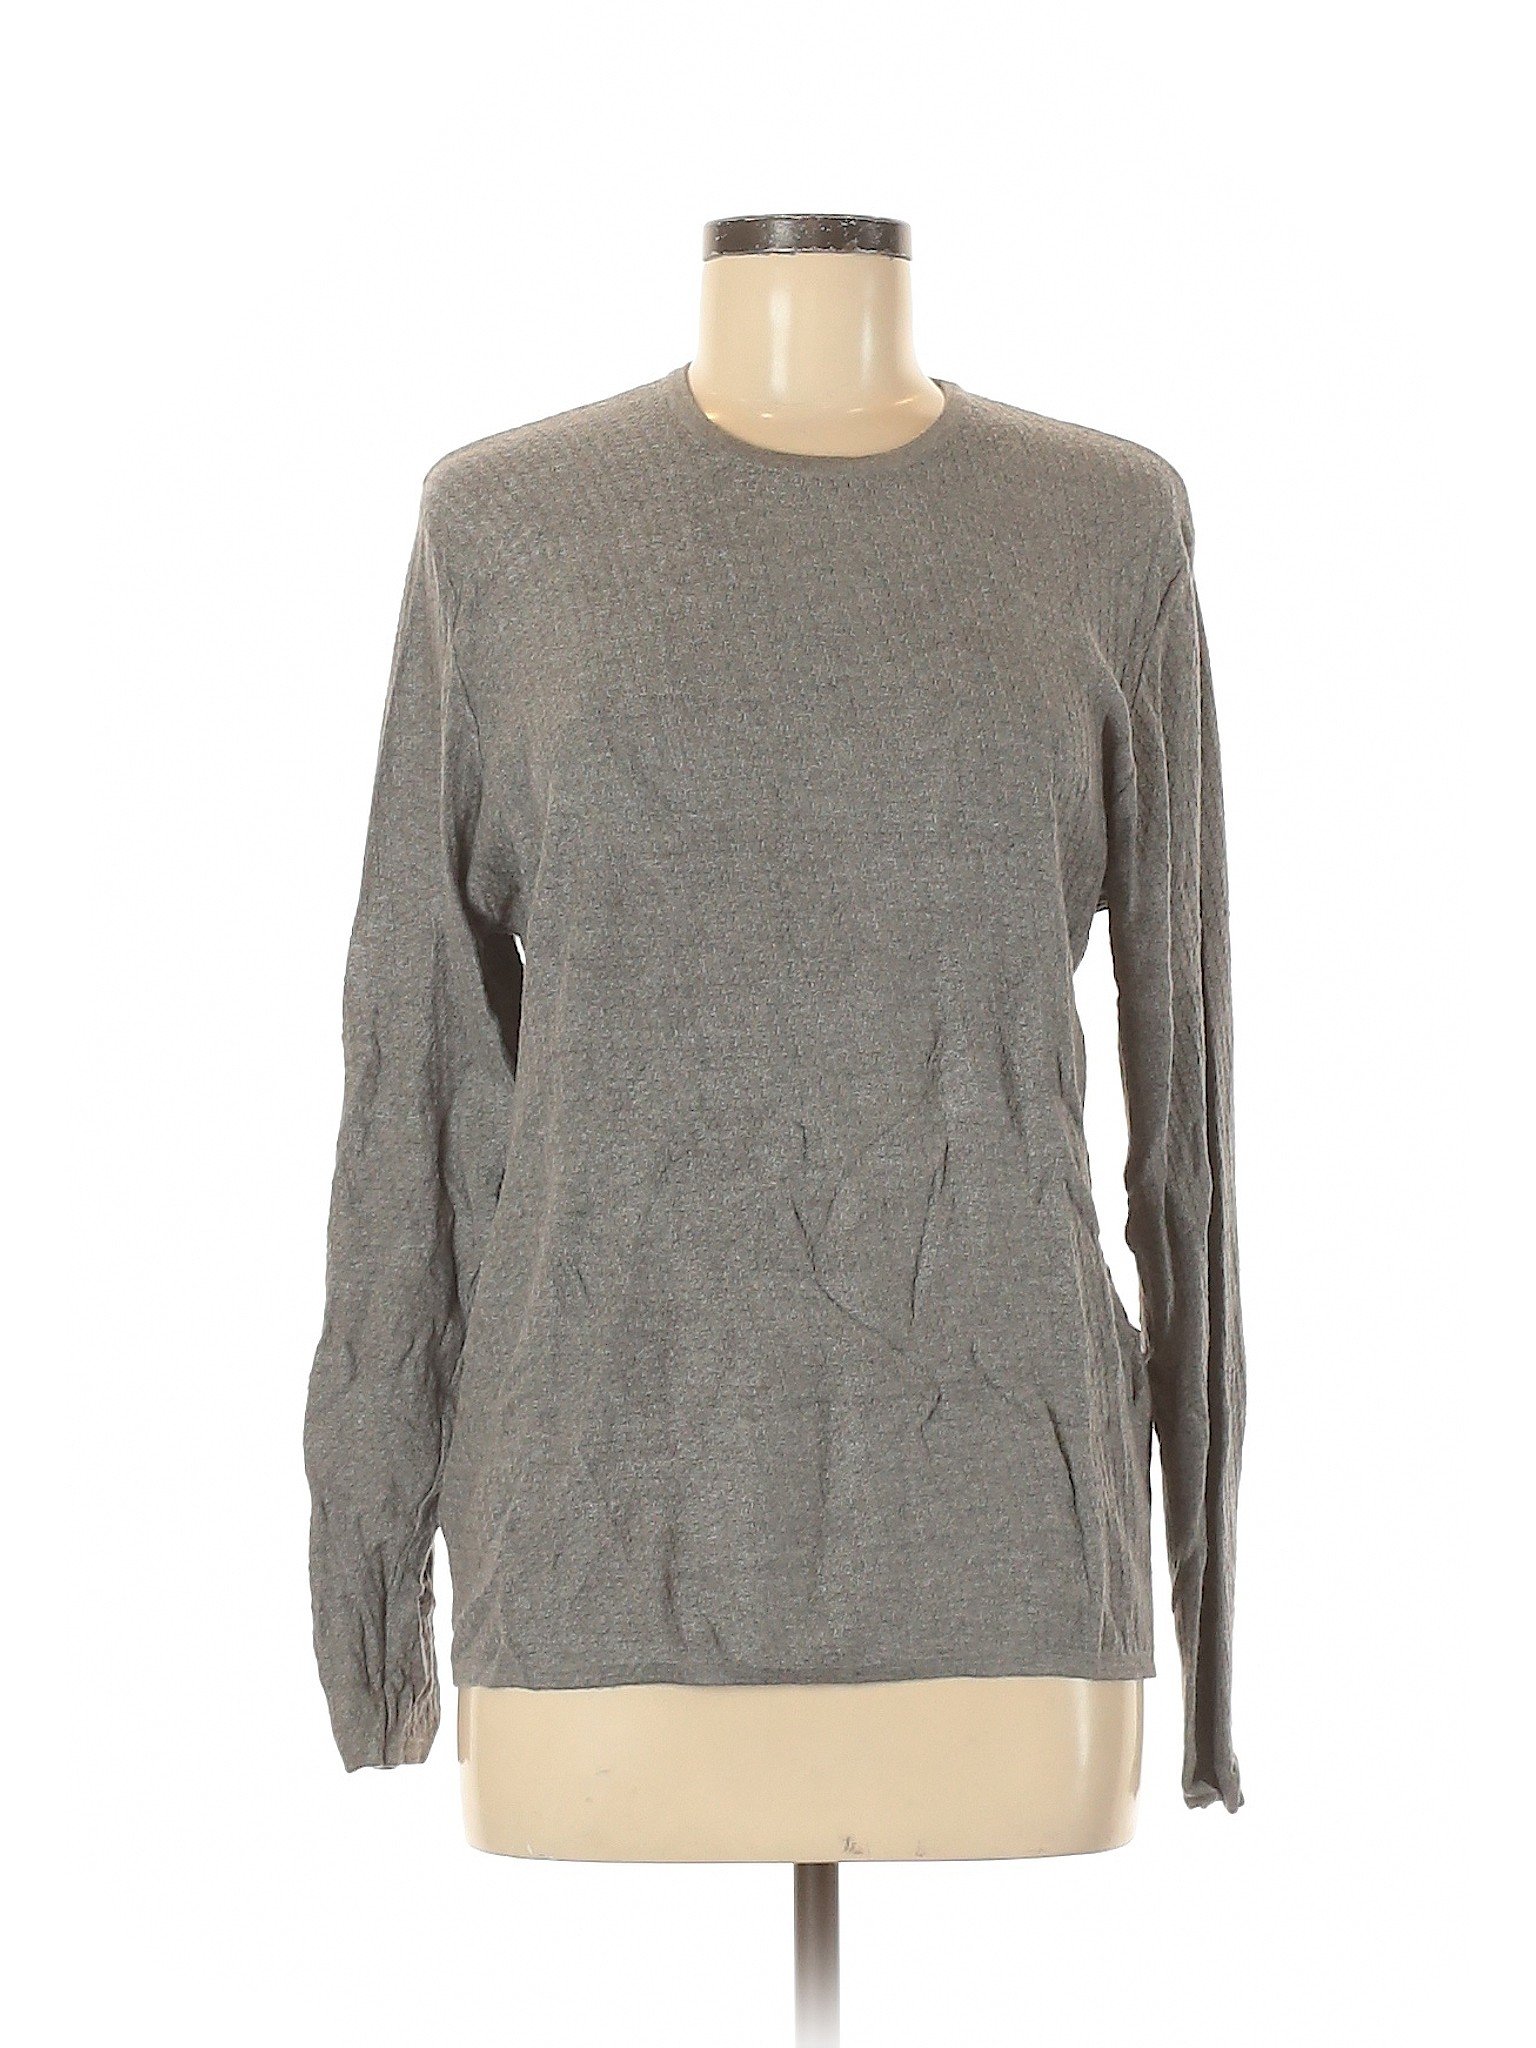 Zara Women Gray Pullover Sweater L | eBay